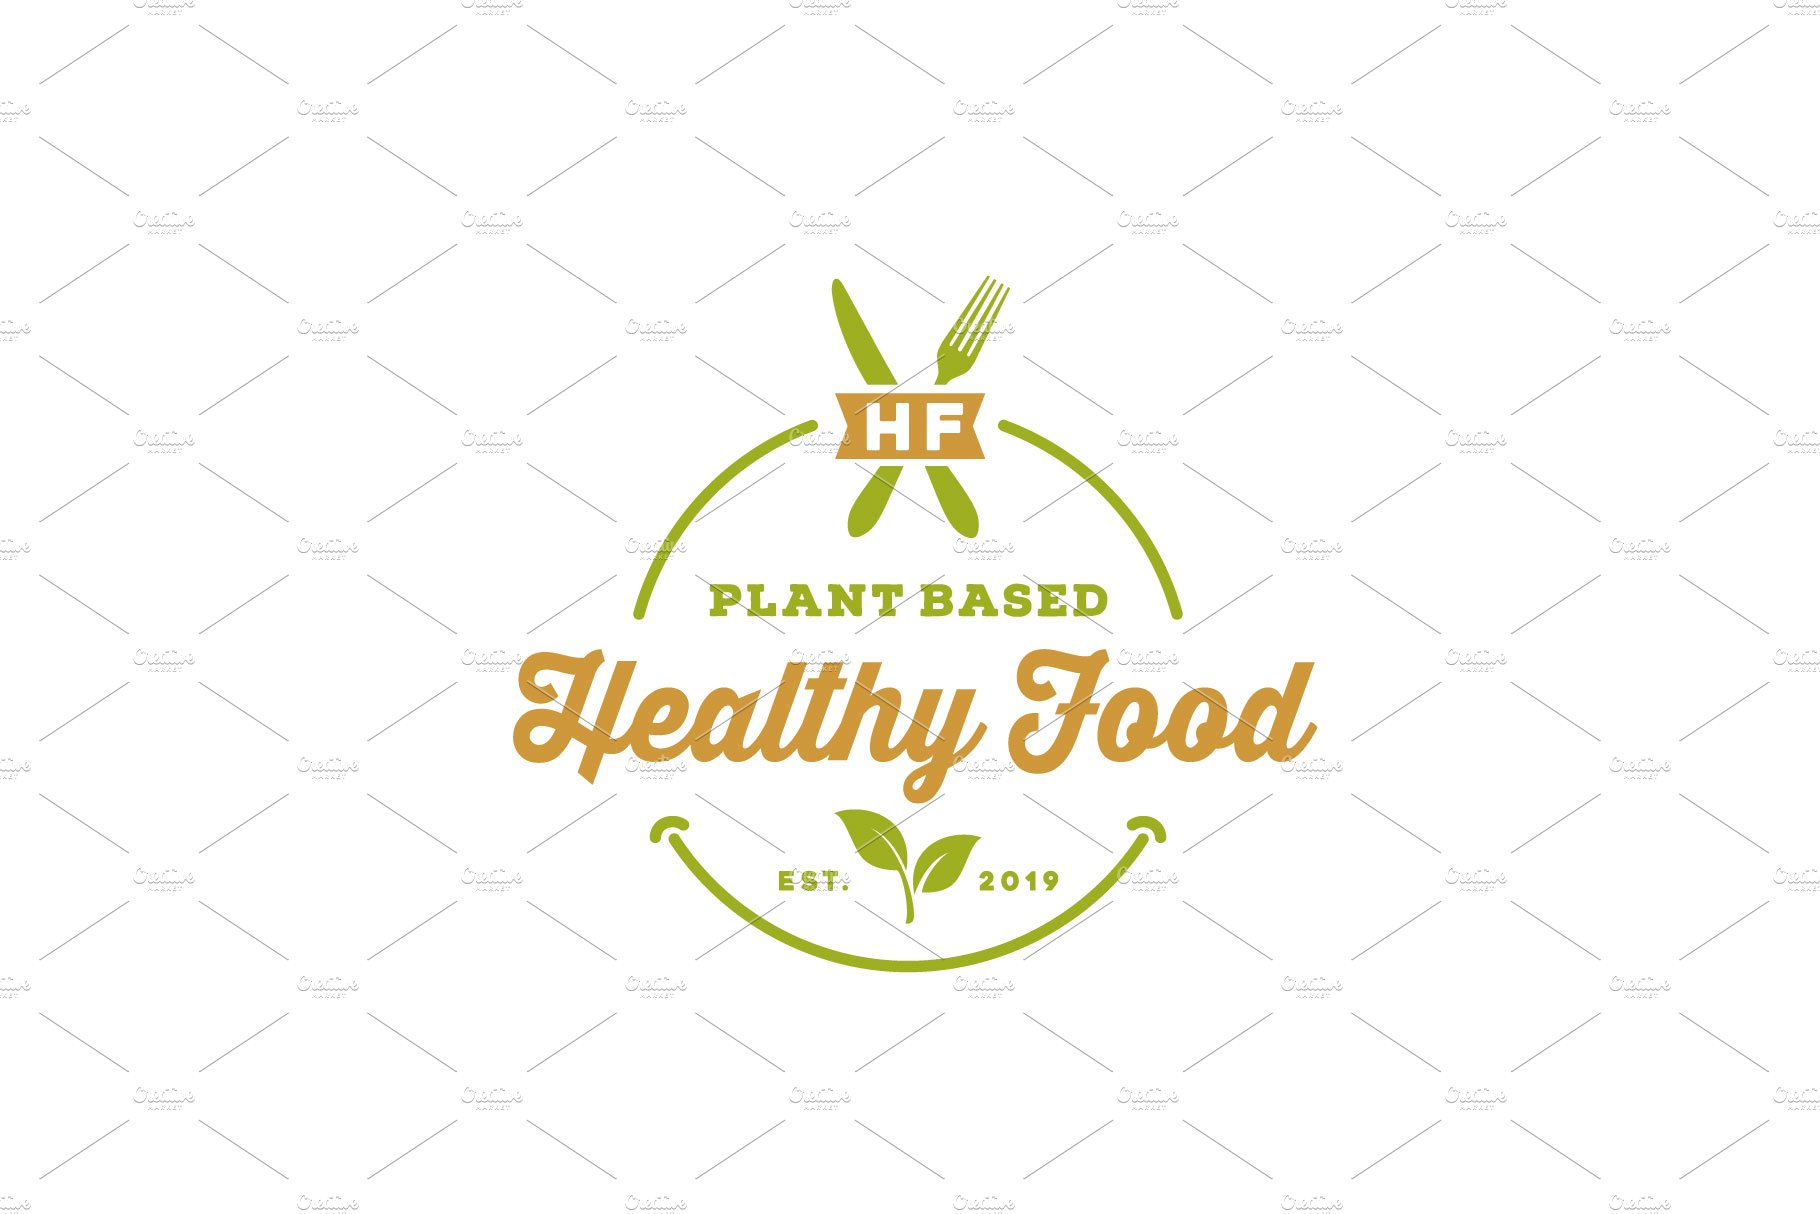 Organic Natural Healthy Food logo cover image.